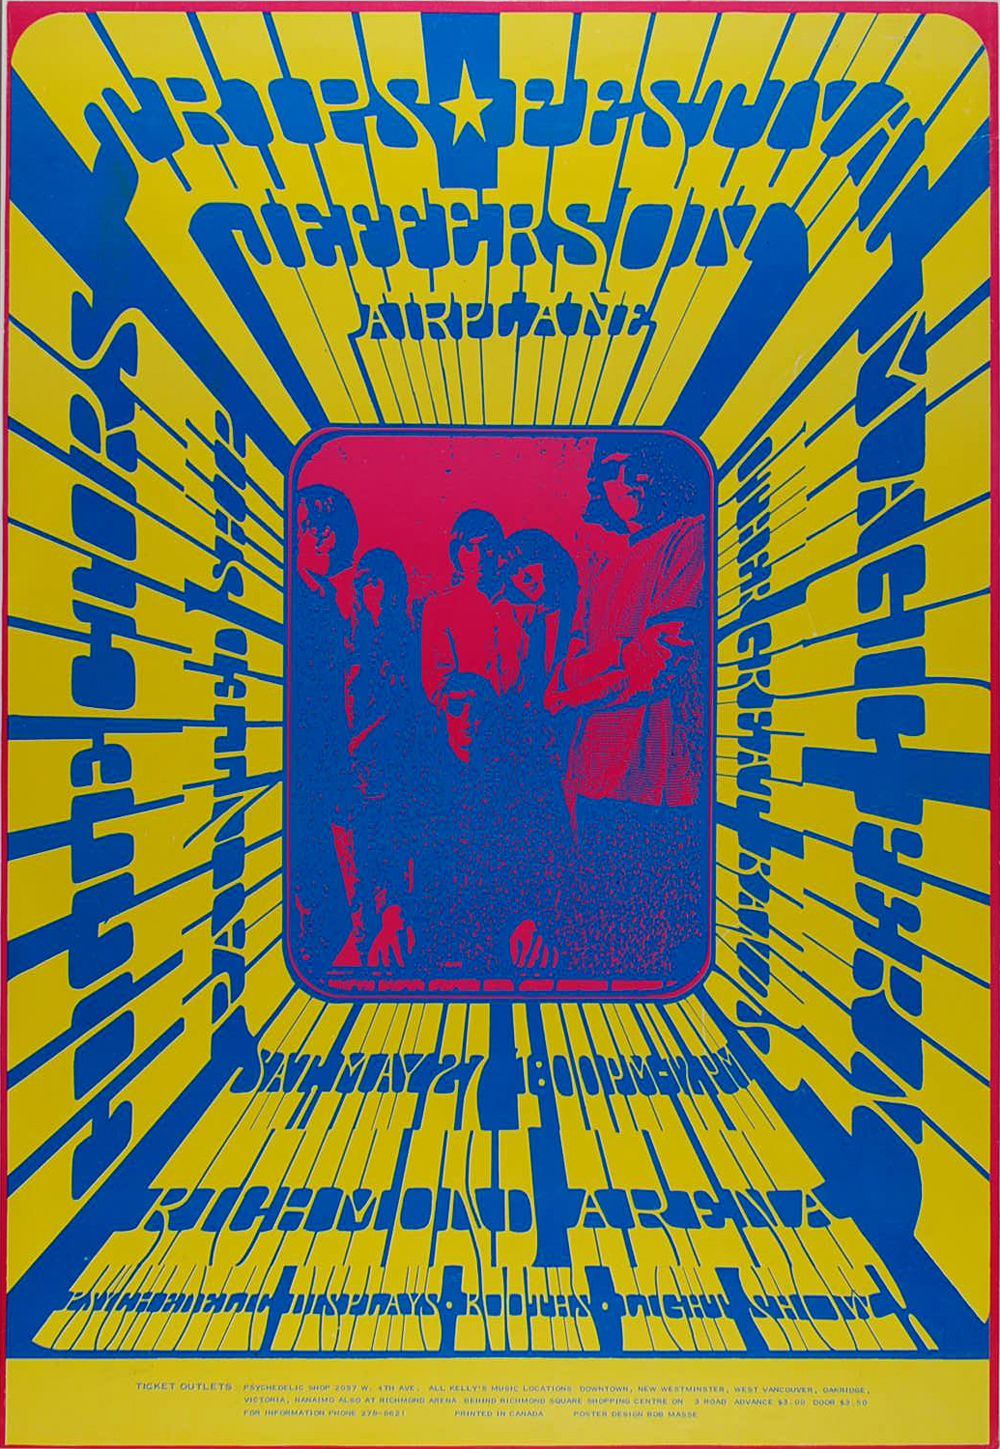 Vancouver Trips Festival 1967 Concert Poster